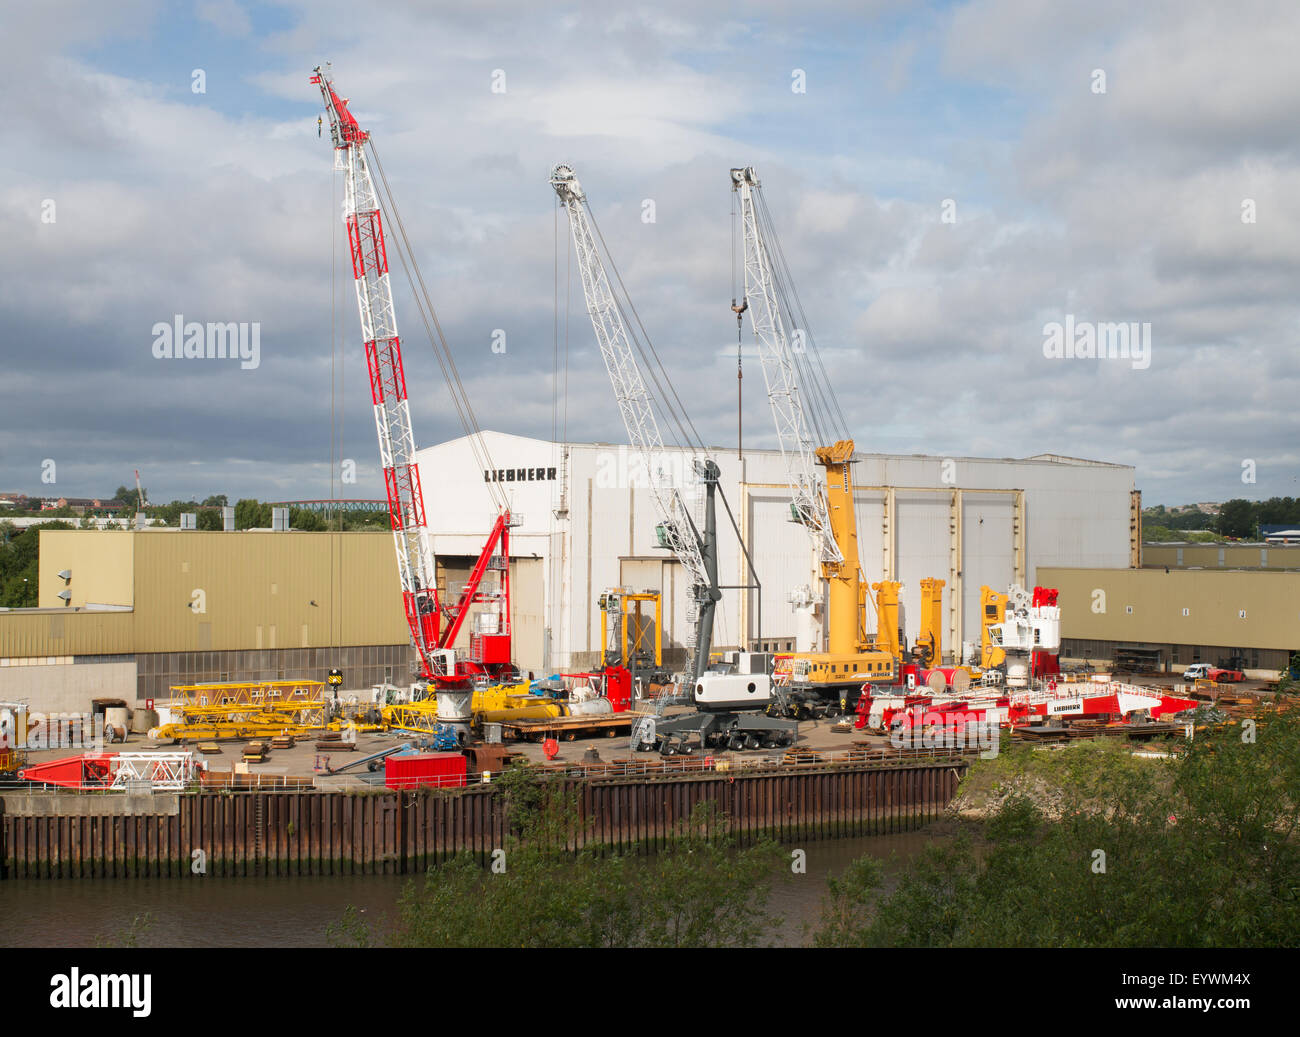 Liebherr crane factory seen across the river Wear in Sunderland, England, UK Stock Photo